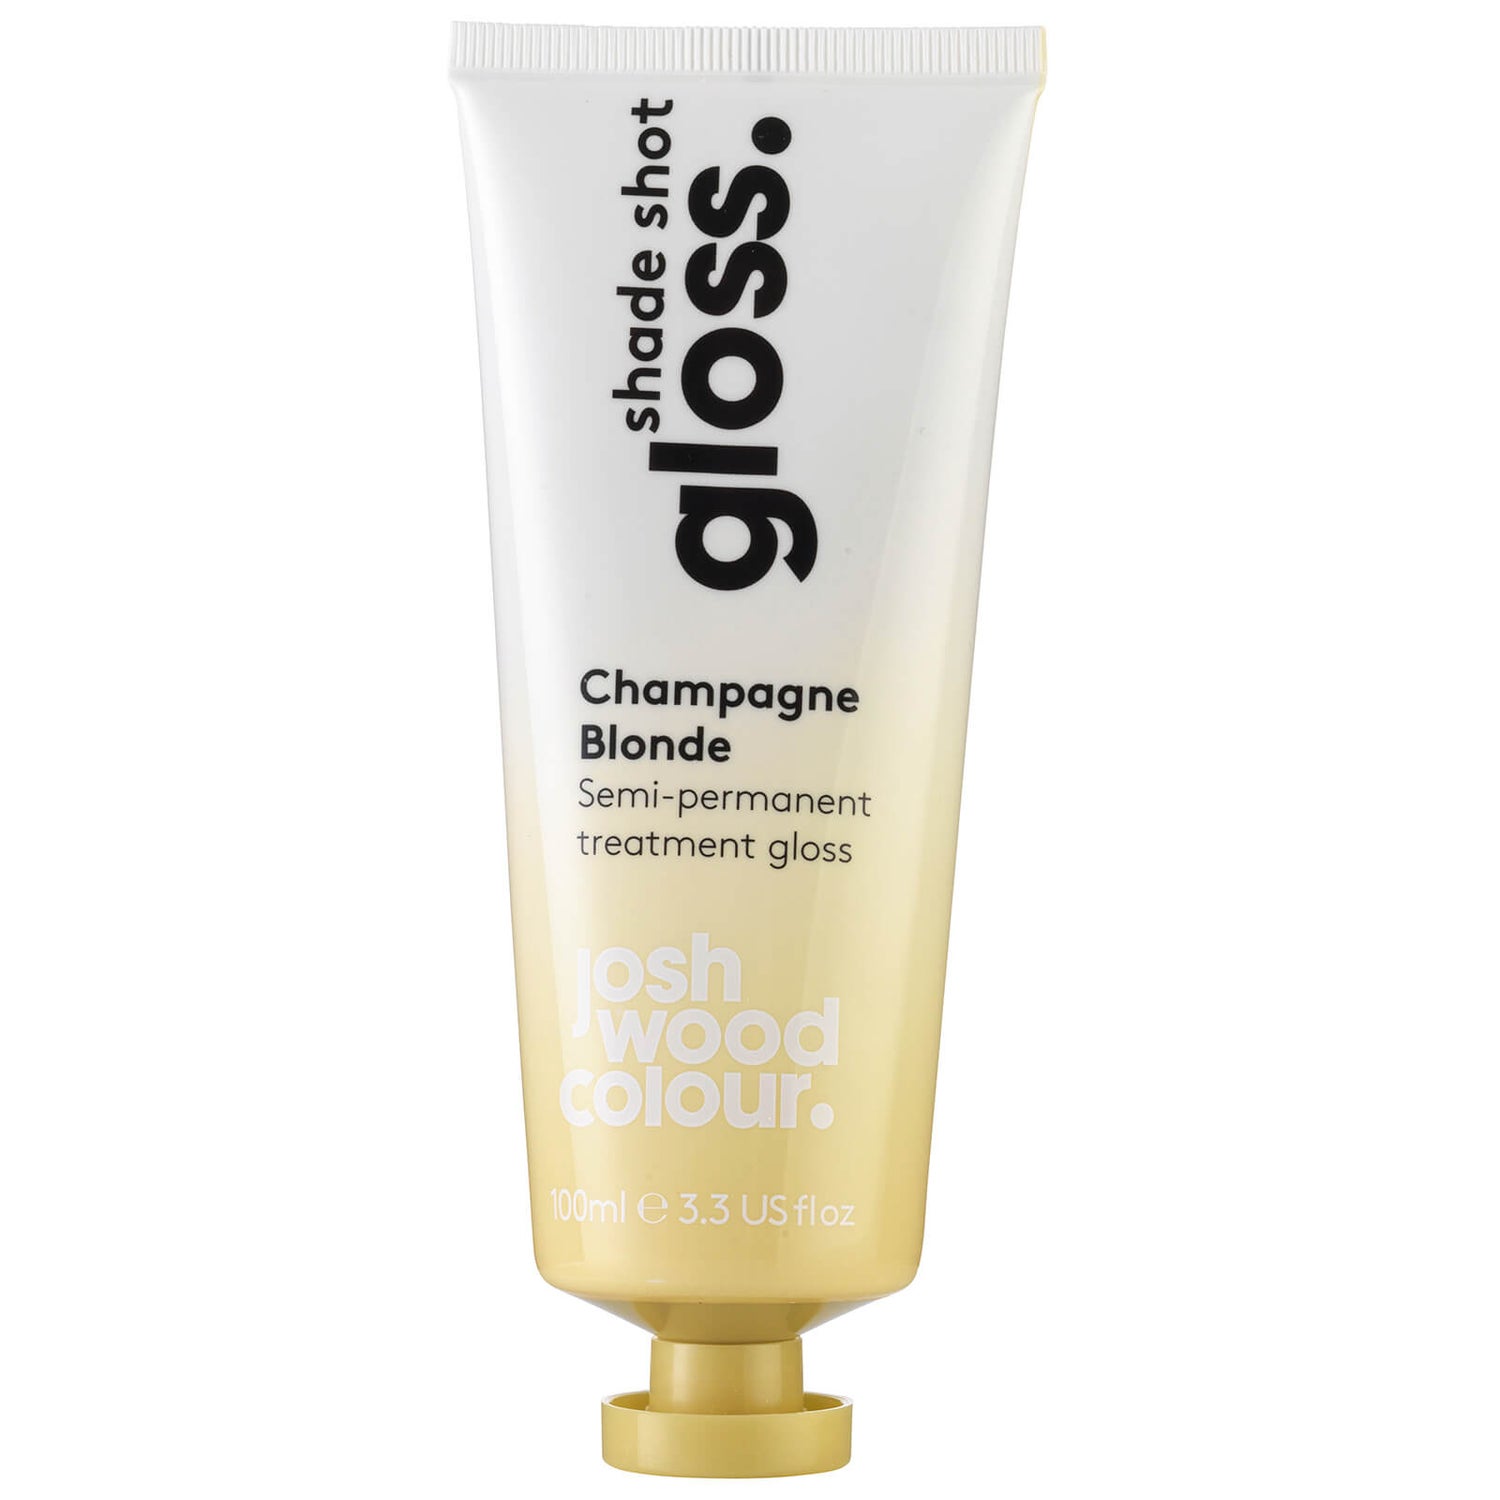 Josh Wood Colour Shade Shot Gloss Champagne Blonde Treatment 100ml |  lookfantastic Singapore